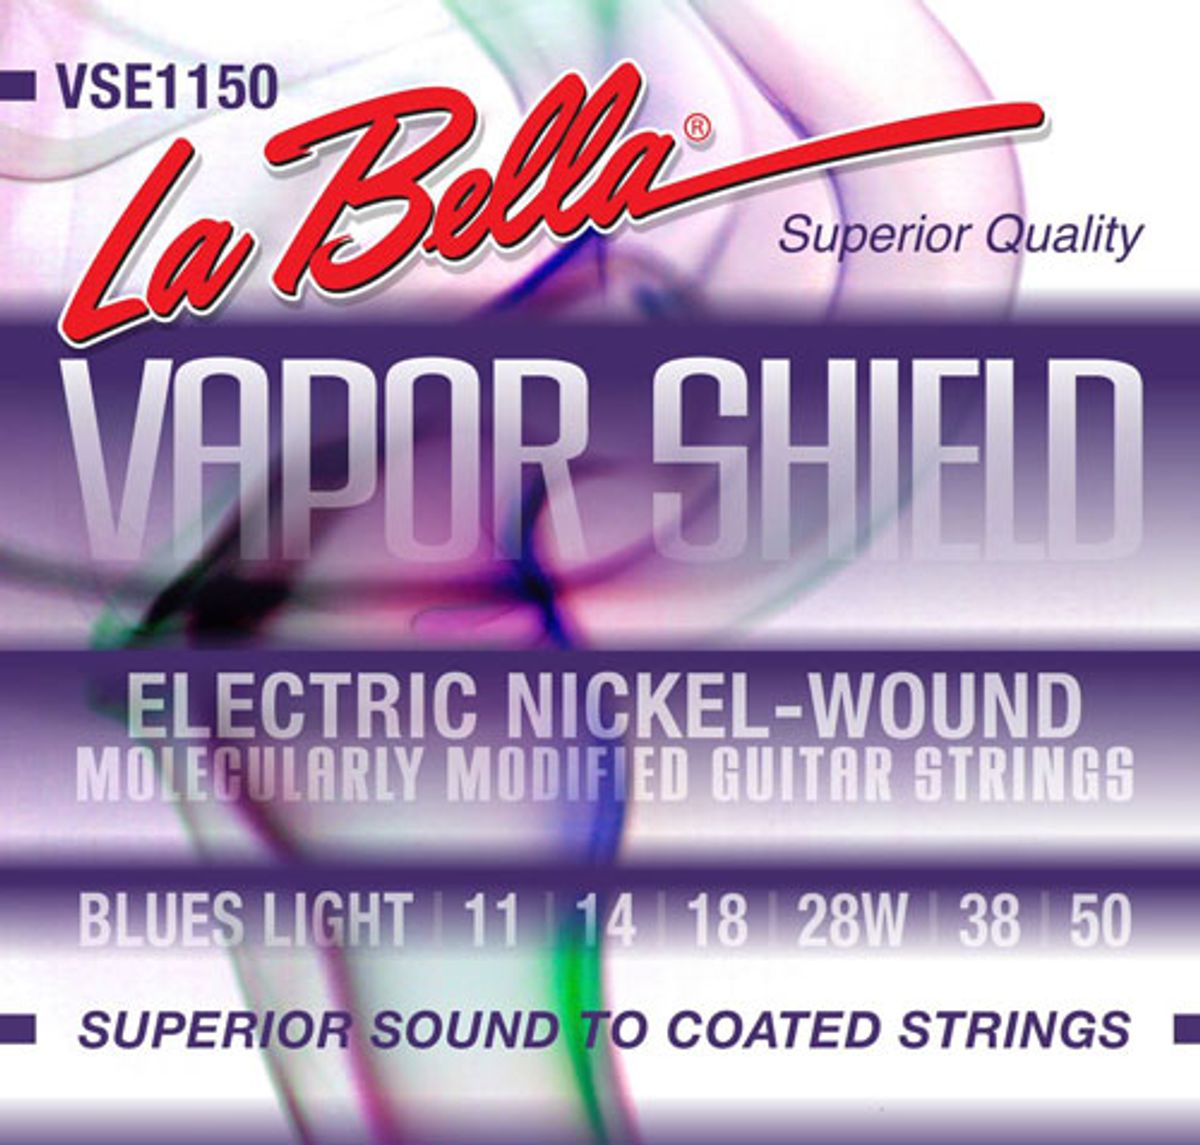 La Bella Strings Introduces Vapor Shield Treated Strings